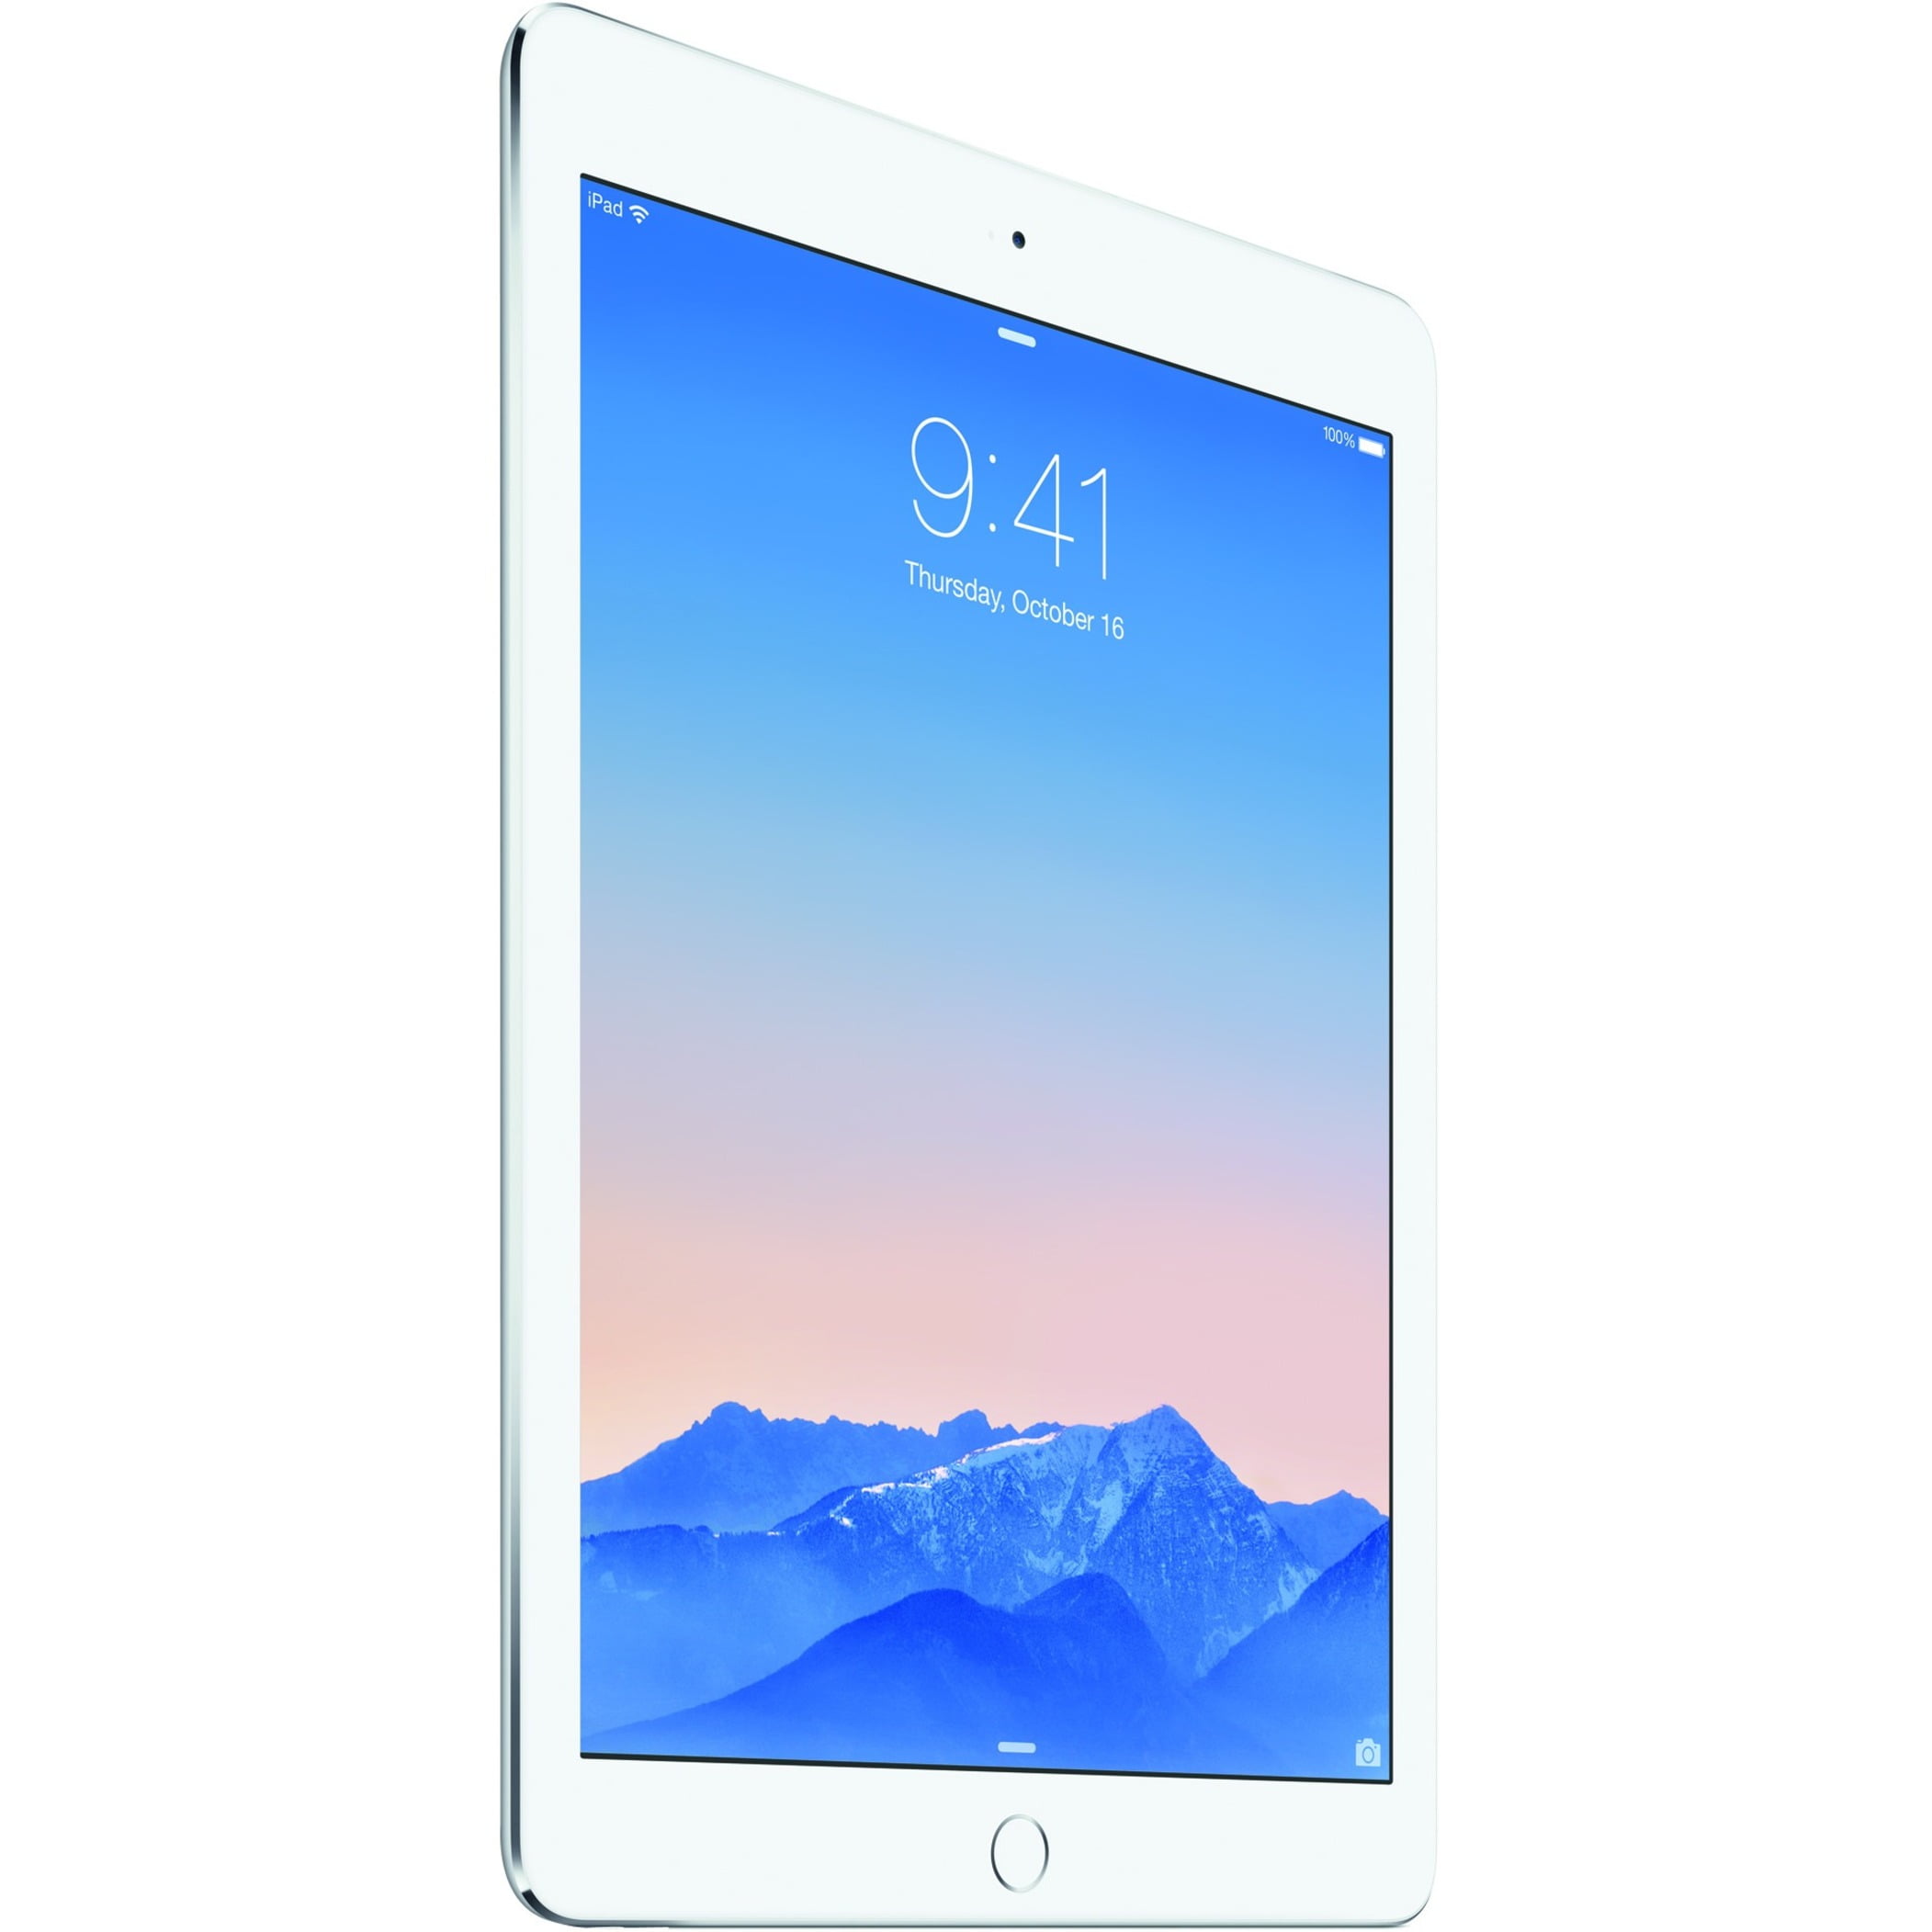 Apple iPad Air 2 MGKM2LL/A Tablet, 9.7